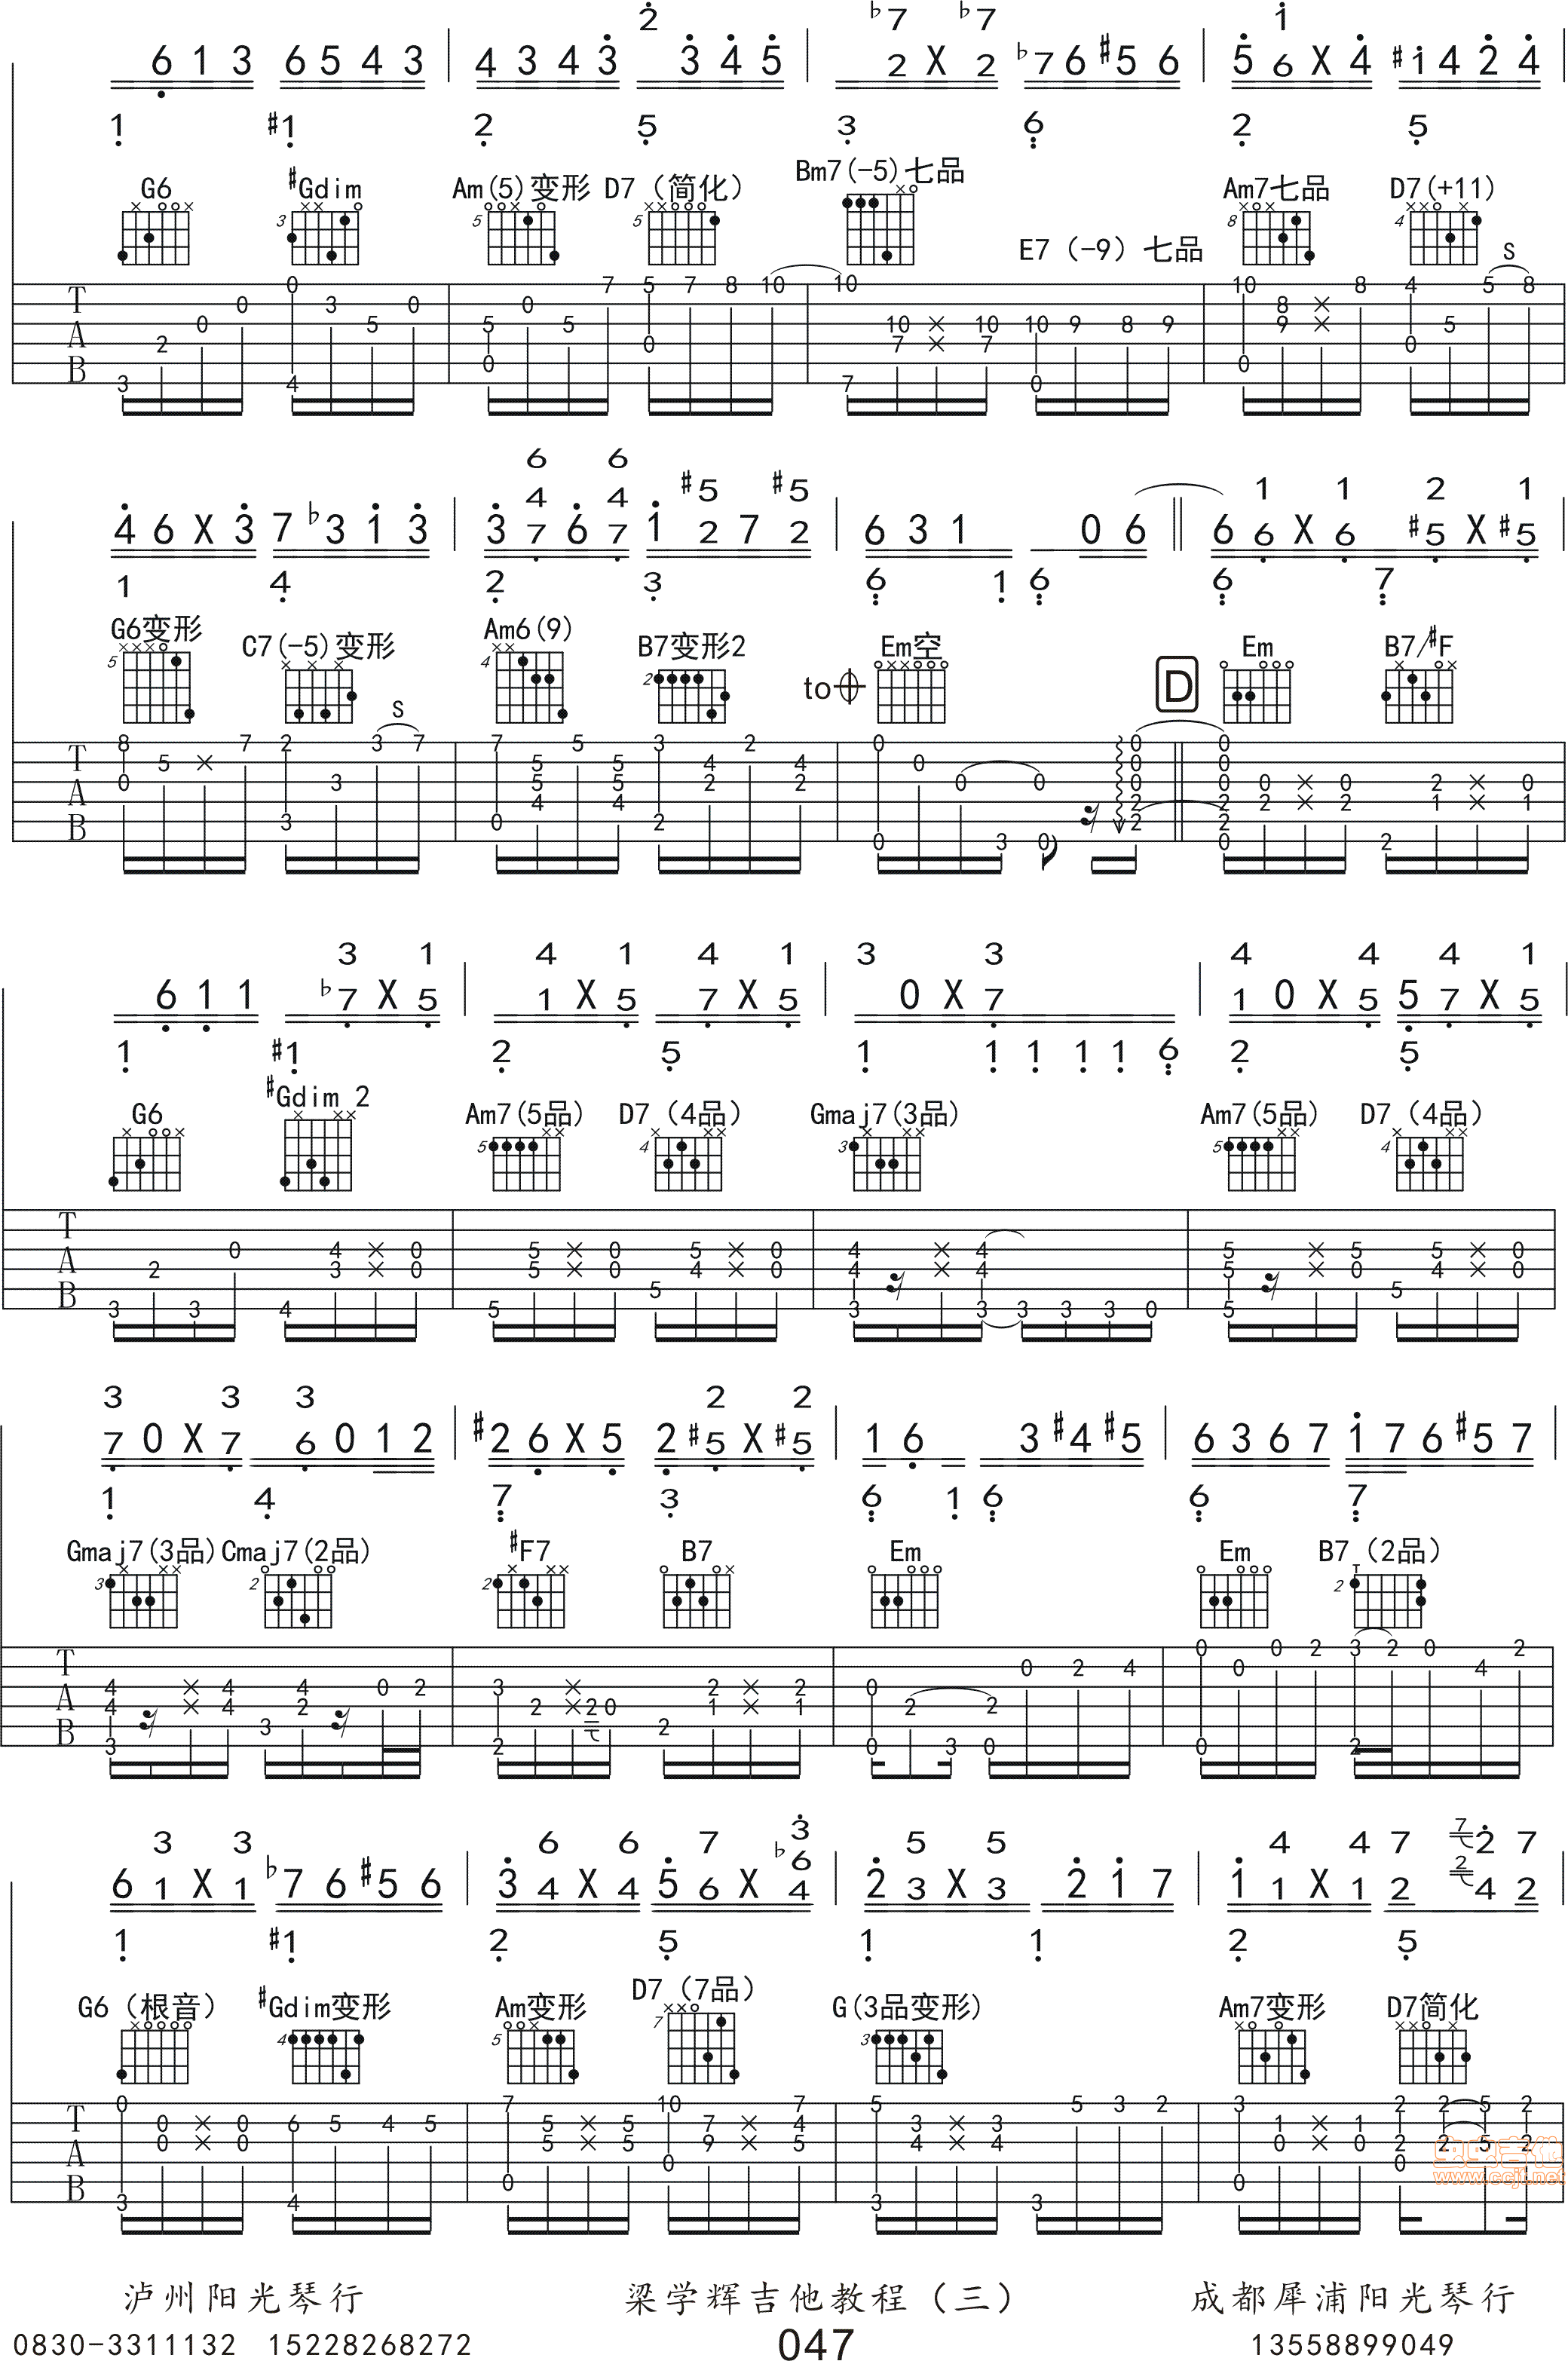 Twilight by Kotaro Oshio SOLO Guitar Tabs Chords Notes Sheet Music Free